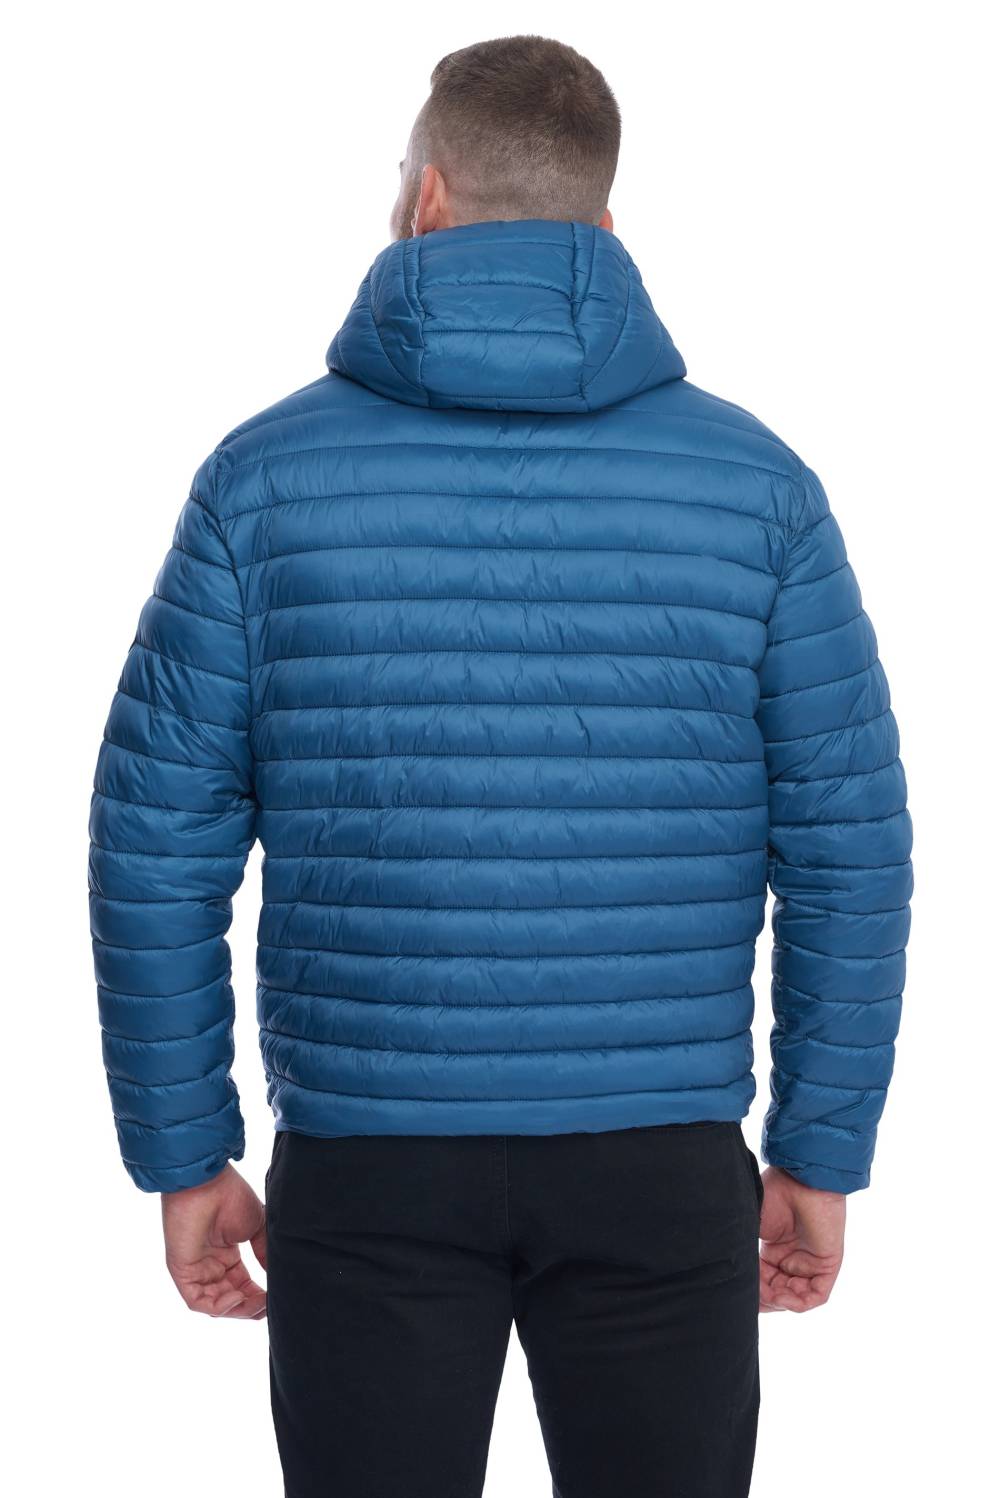 Alpine North Men's Vegan Down Lightweight Packable Puffer Jacket & Bag